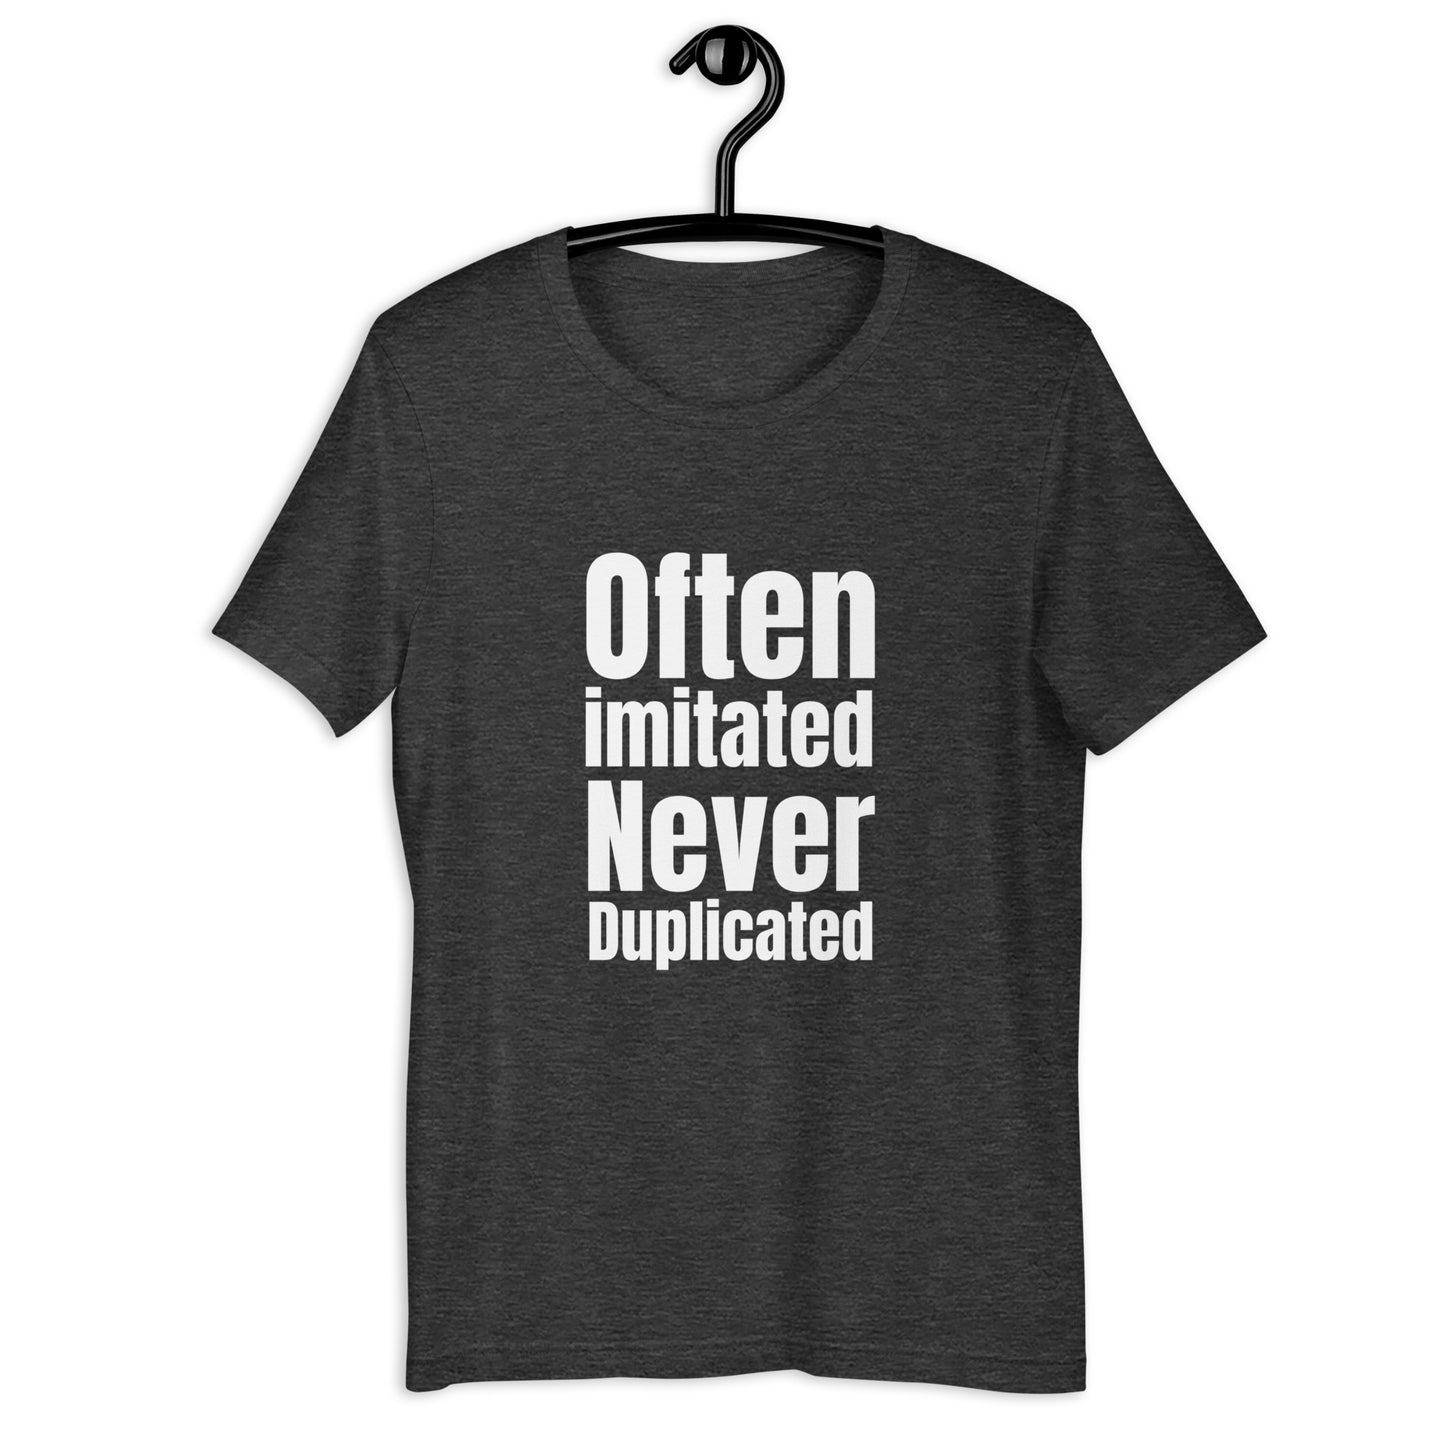 Often Imitated Never Duplicated Women's T-Shirt